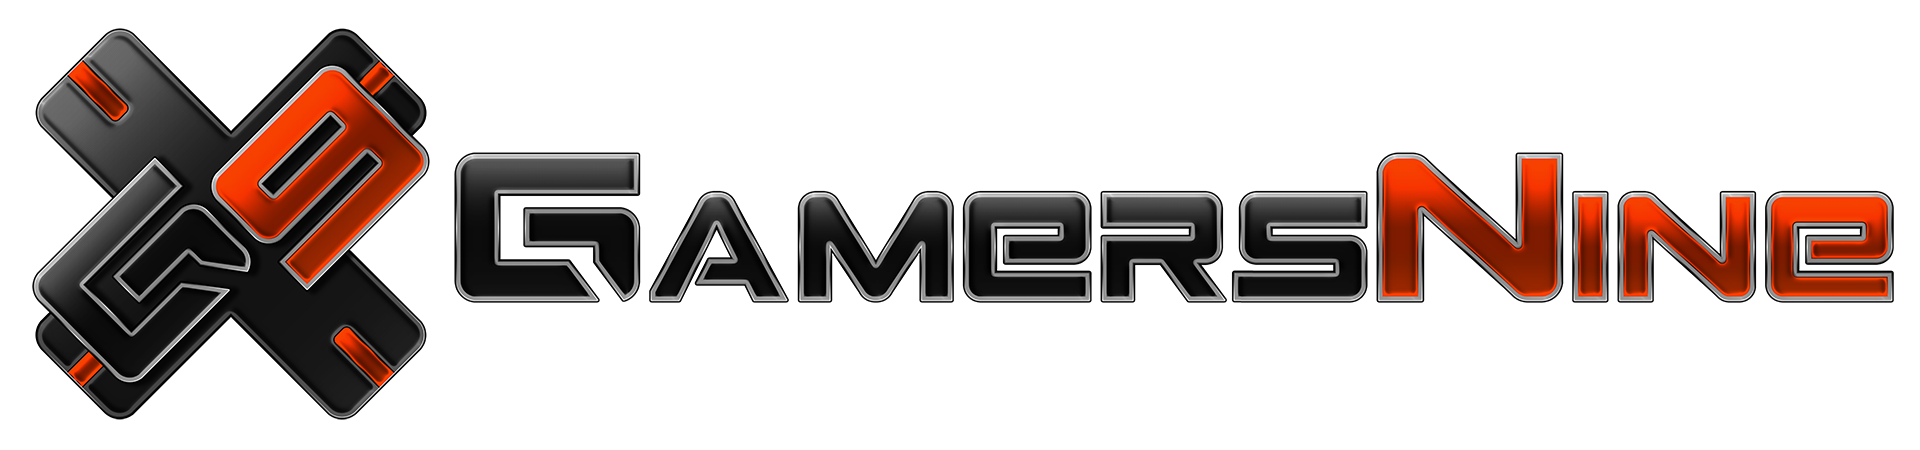 logo GamersNine 1 ok